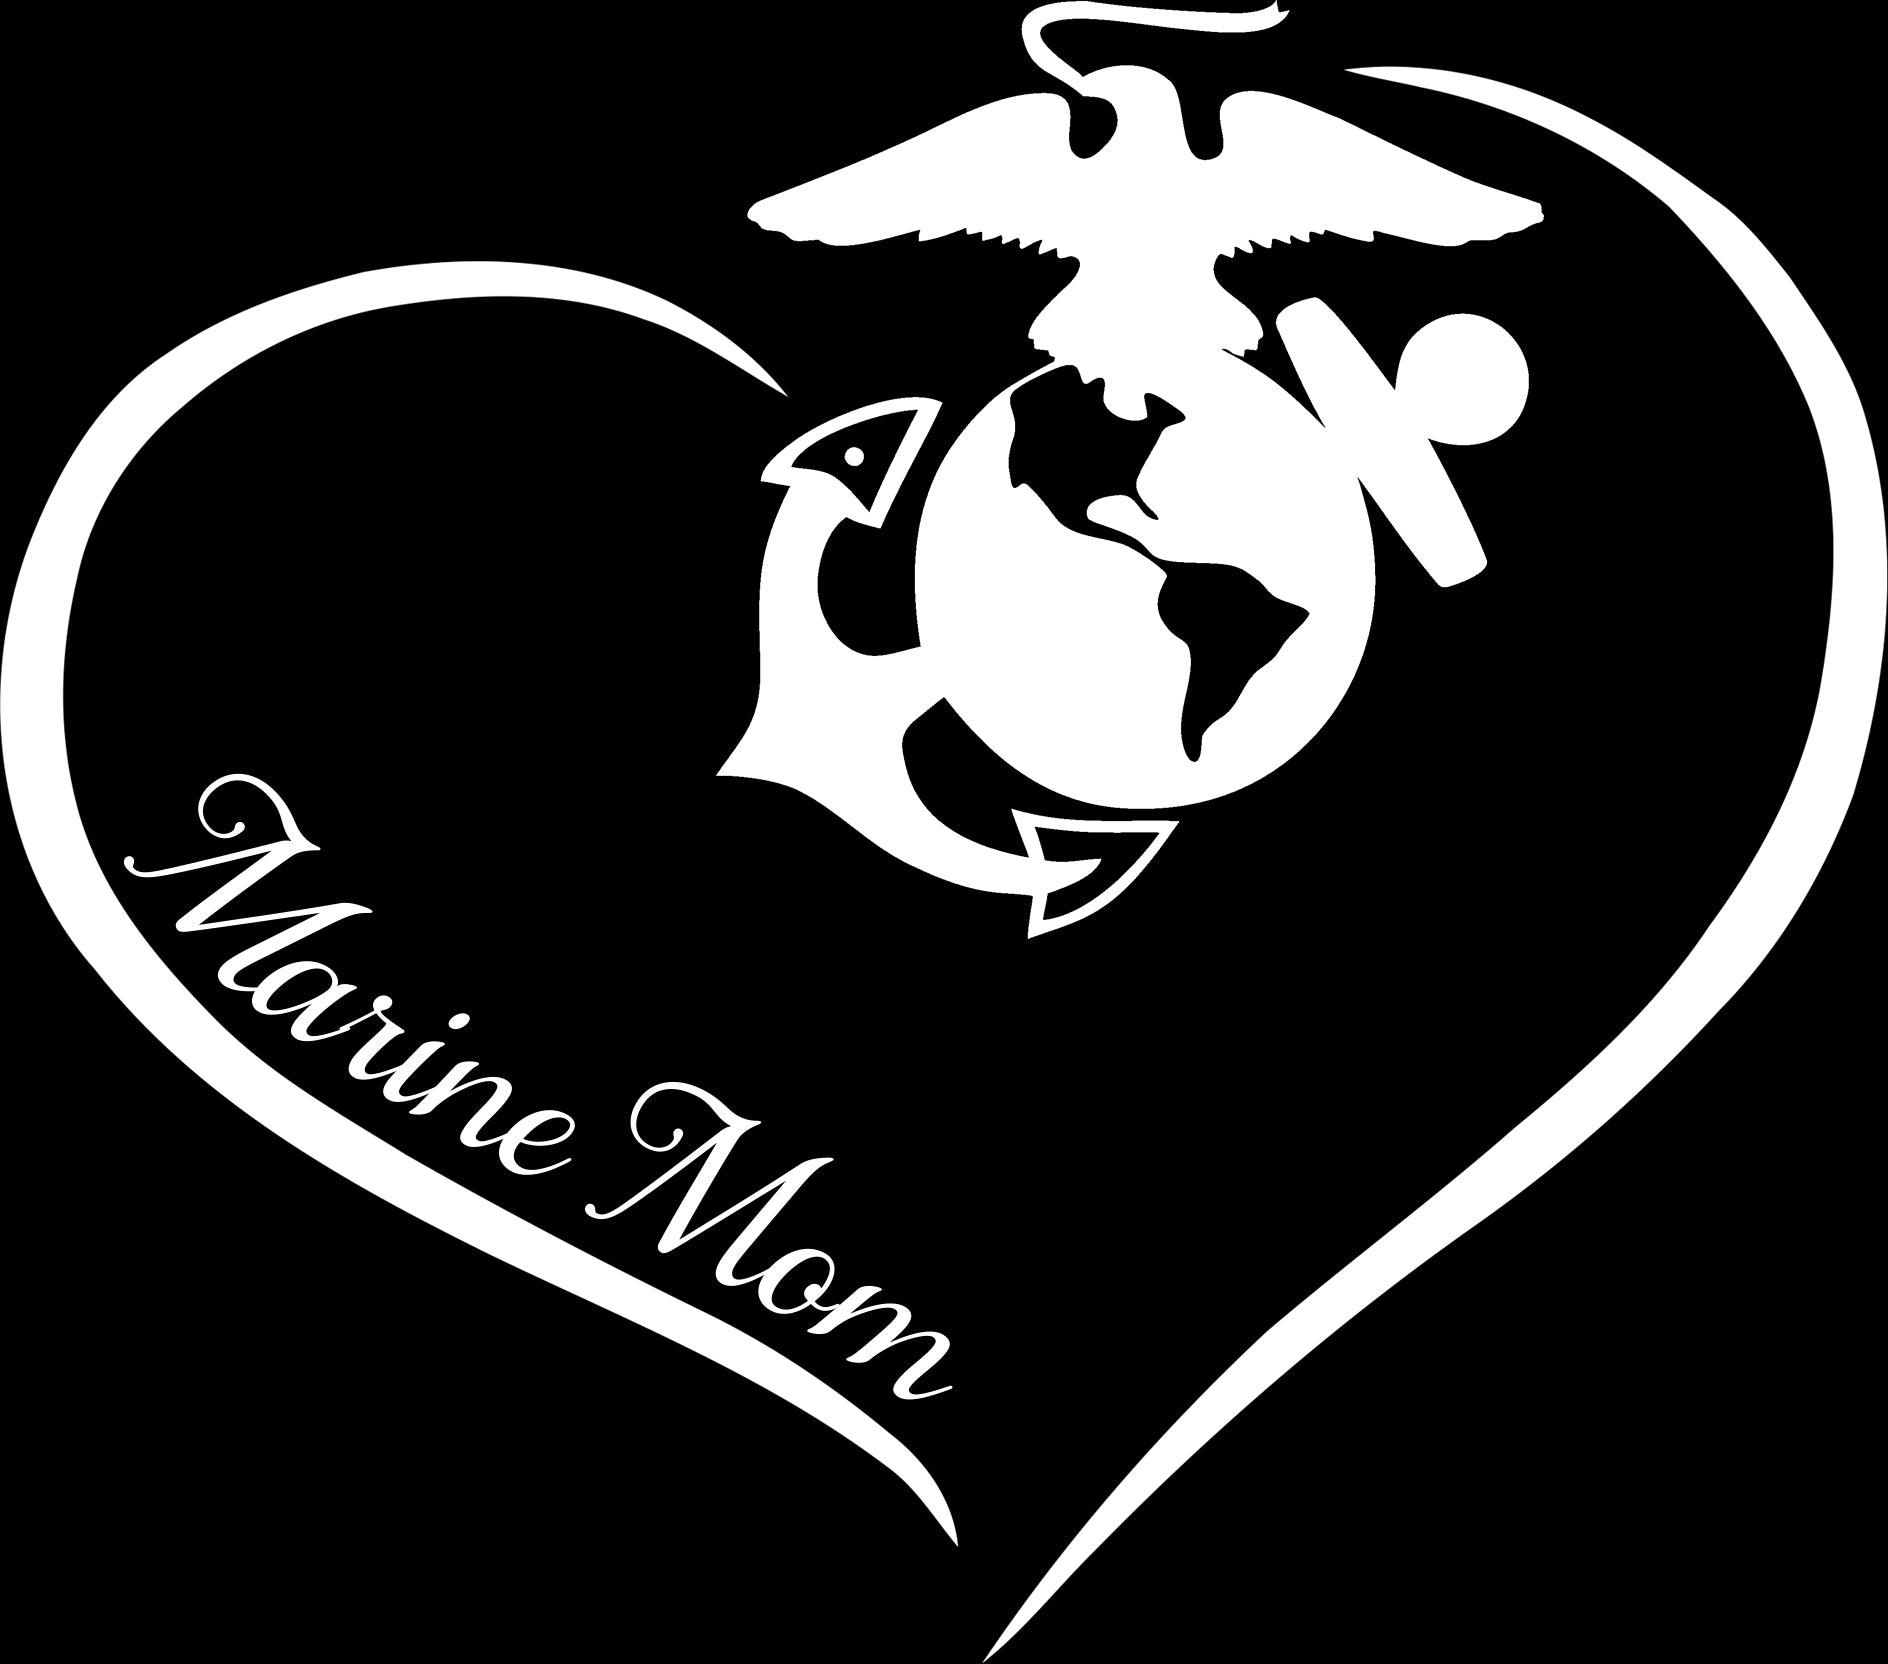 Download My Hero Son Proud Usmc Mom Marines Military Forces Vinyl Decal Sticker Window Decor Decals Stickers Vinyl Art Home Garden